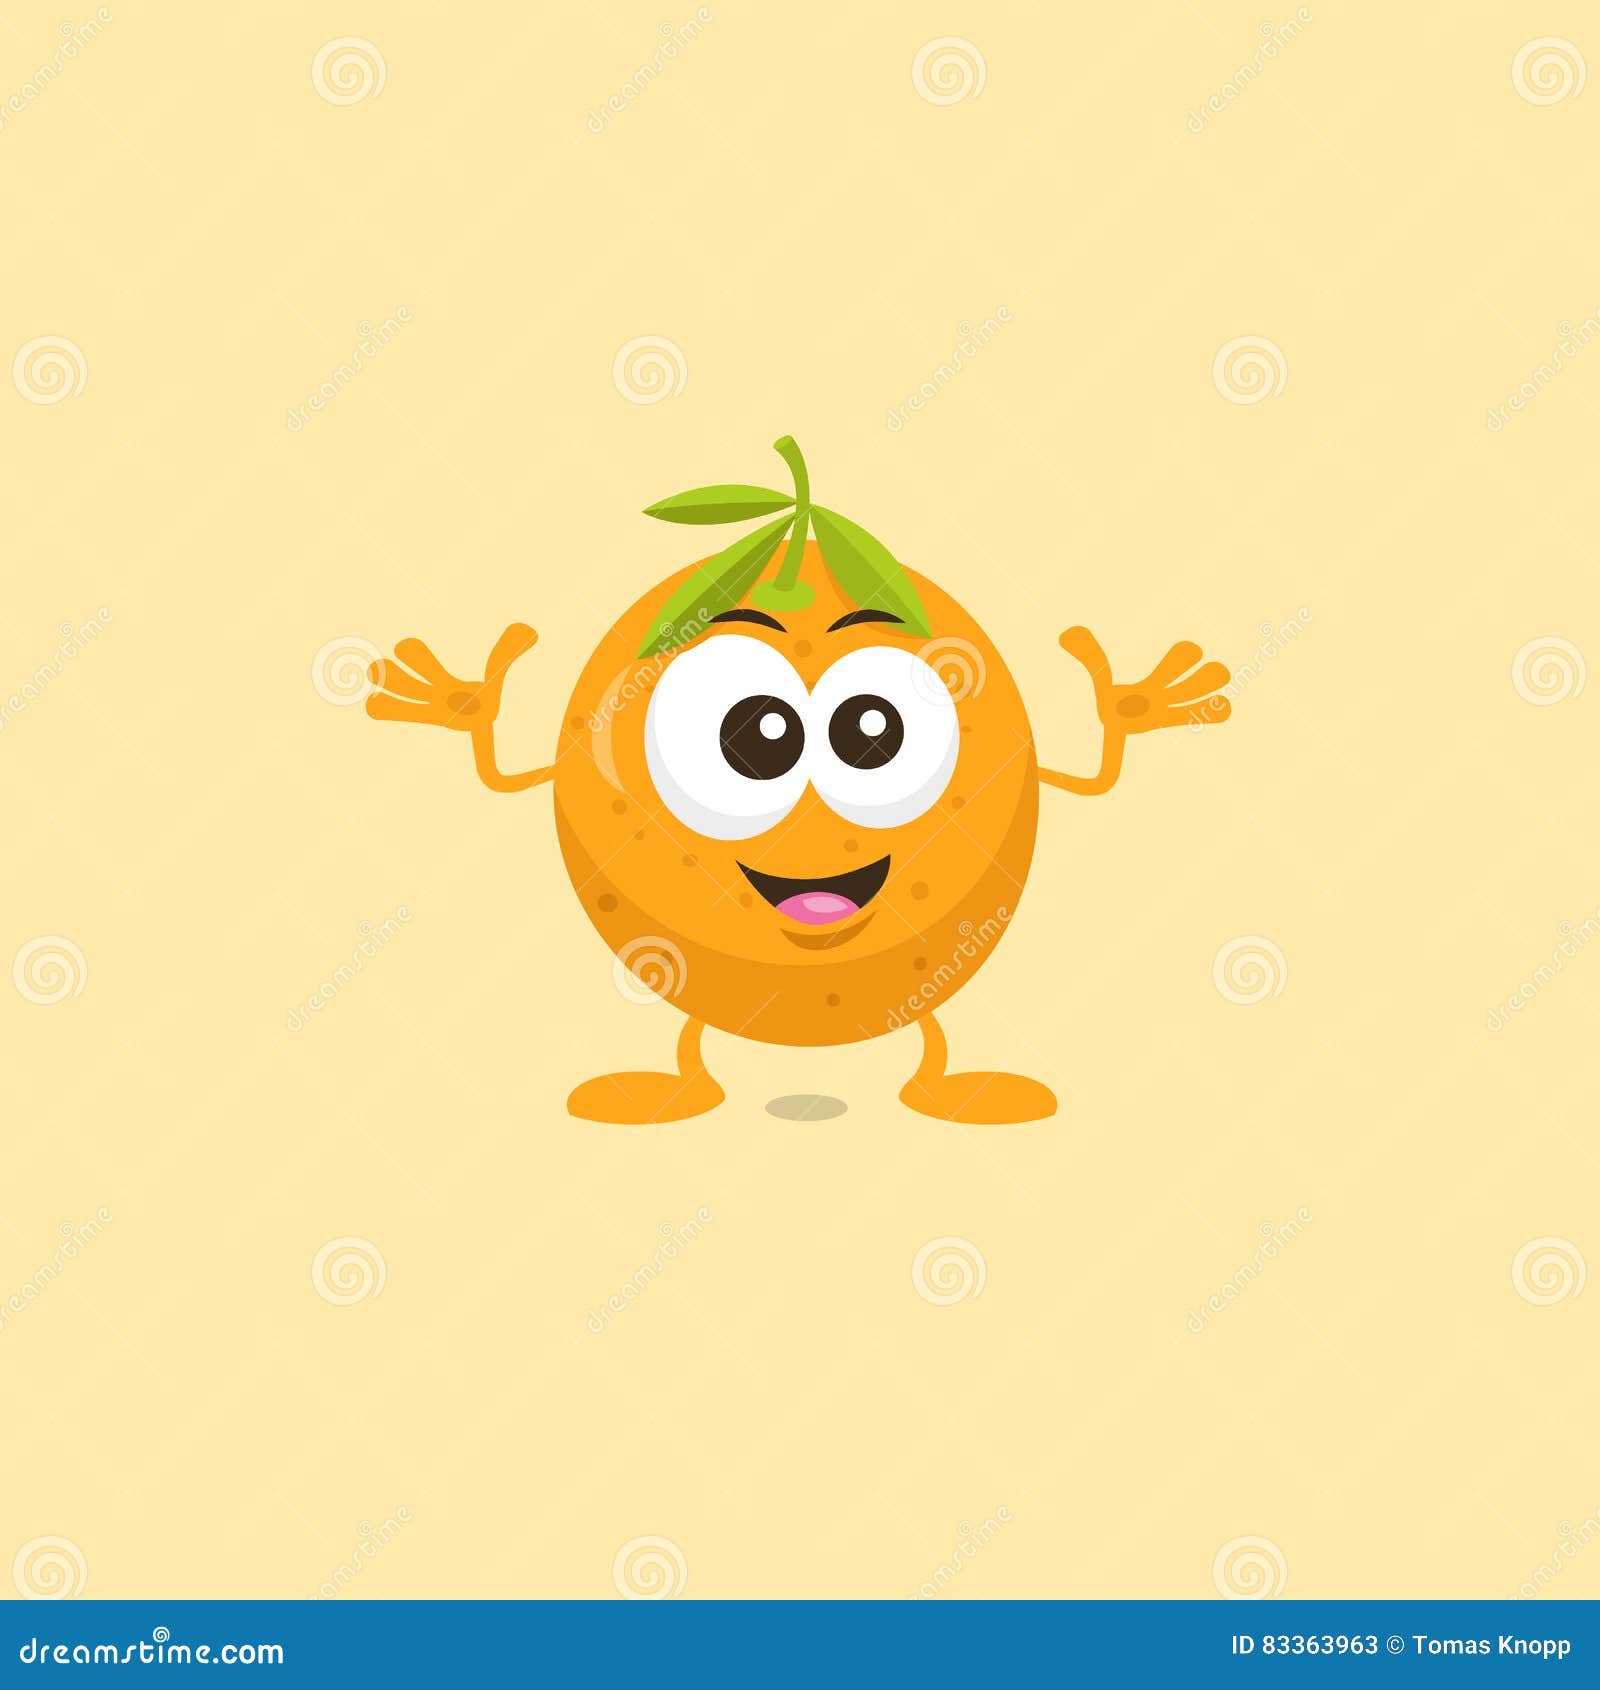 orange decisive mascot